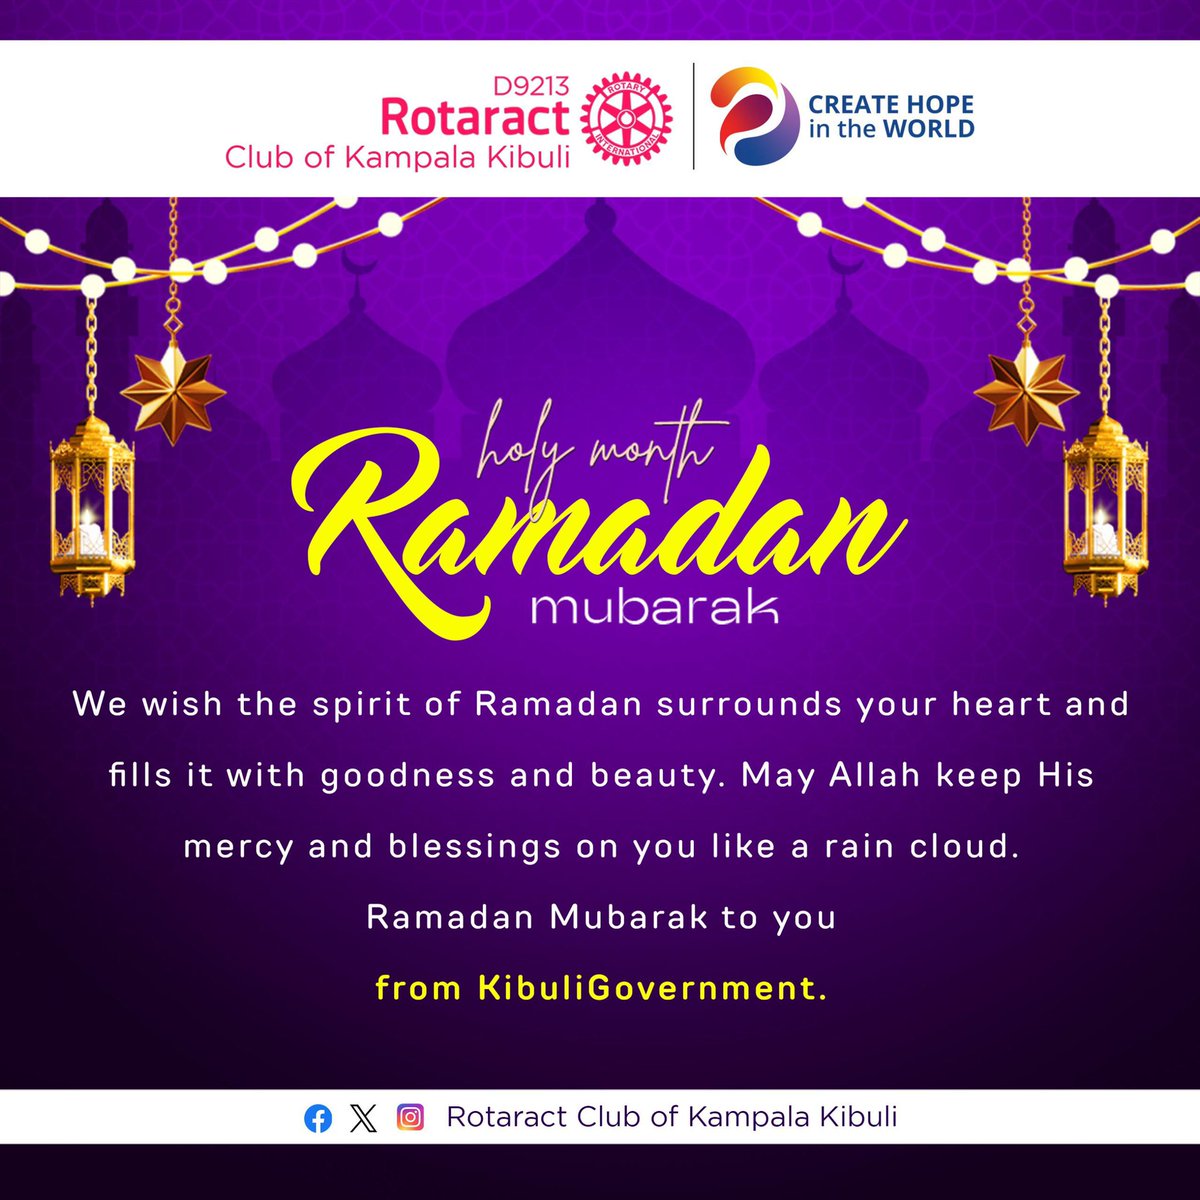 Ramadan Mubarak to you and your family from the #KibuliGovernment. @RotaractD9213 @Rotaract_TV @RotaryMedia256 

#rctklakibuli #prteamrcrklakibuli #RotaractUGAt40